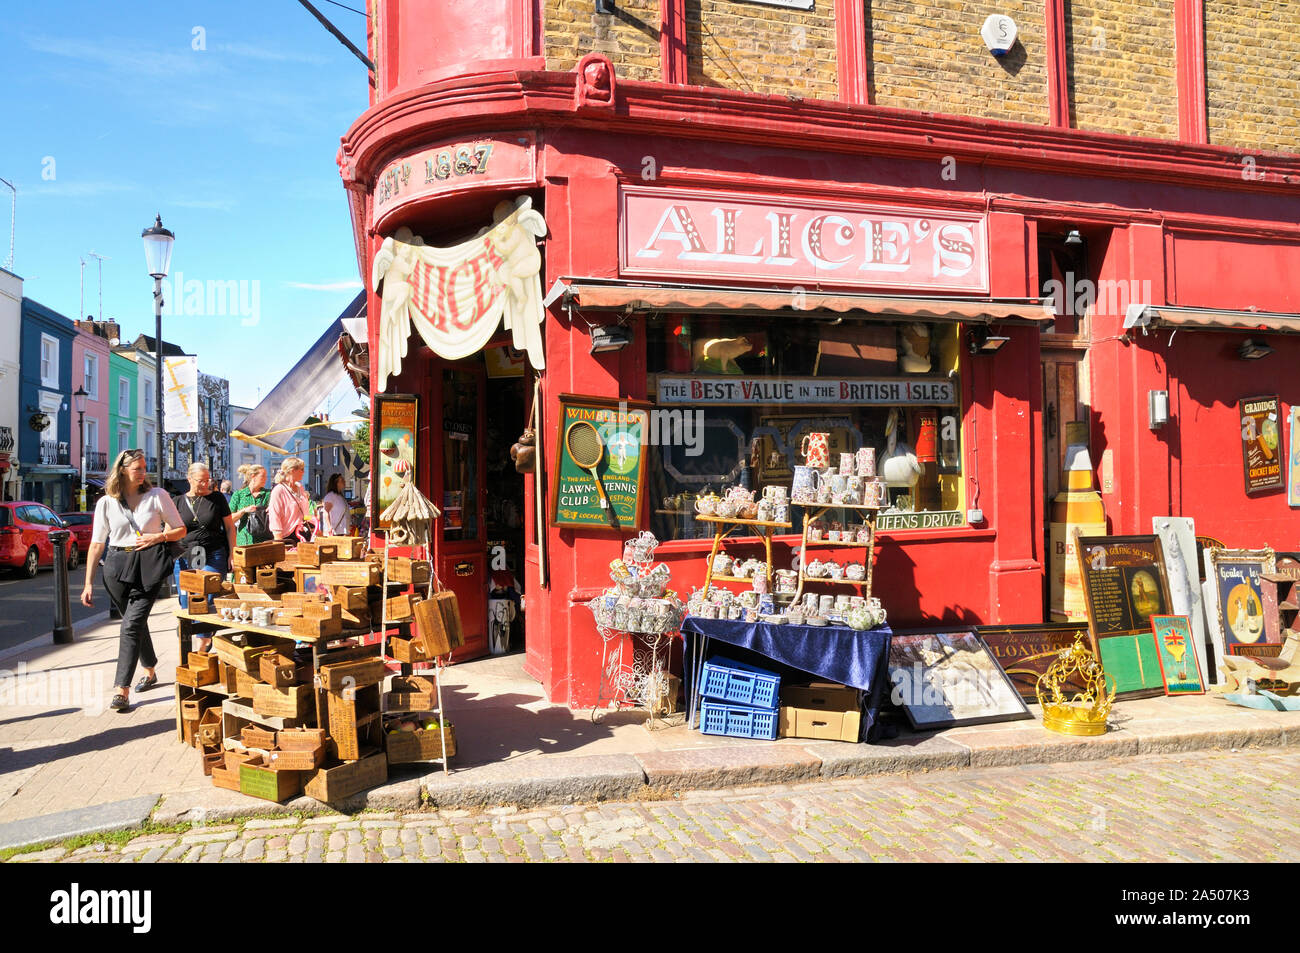 Alice's Antiques Shop, Portobello Road, Notting Hill, London W11, England, UK Banque D'Images